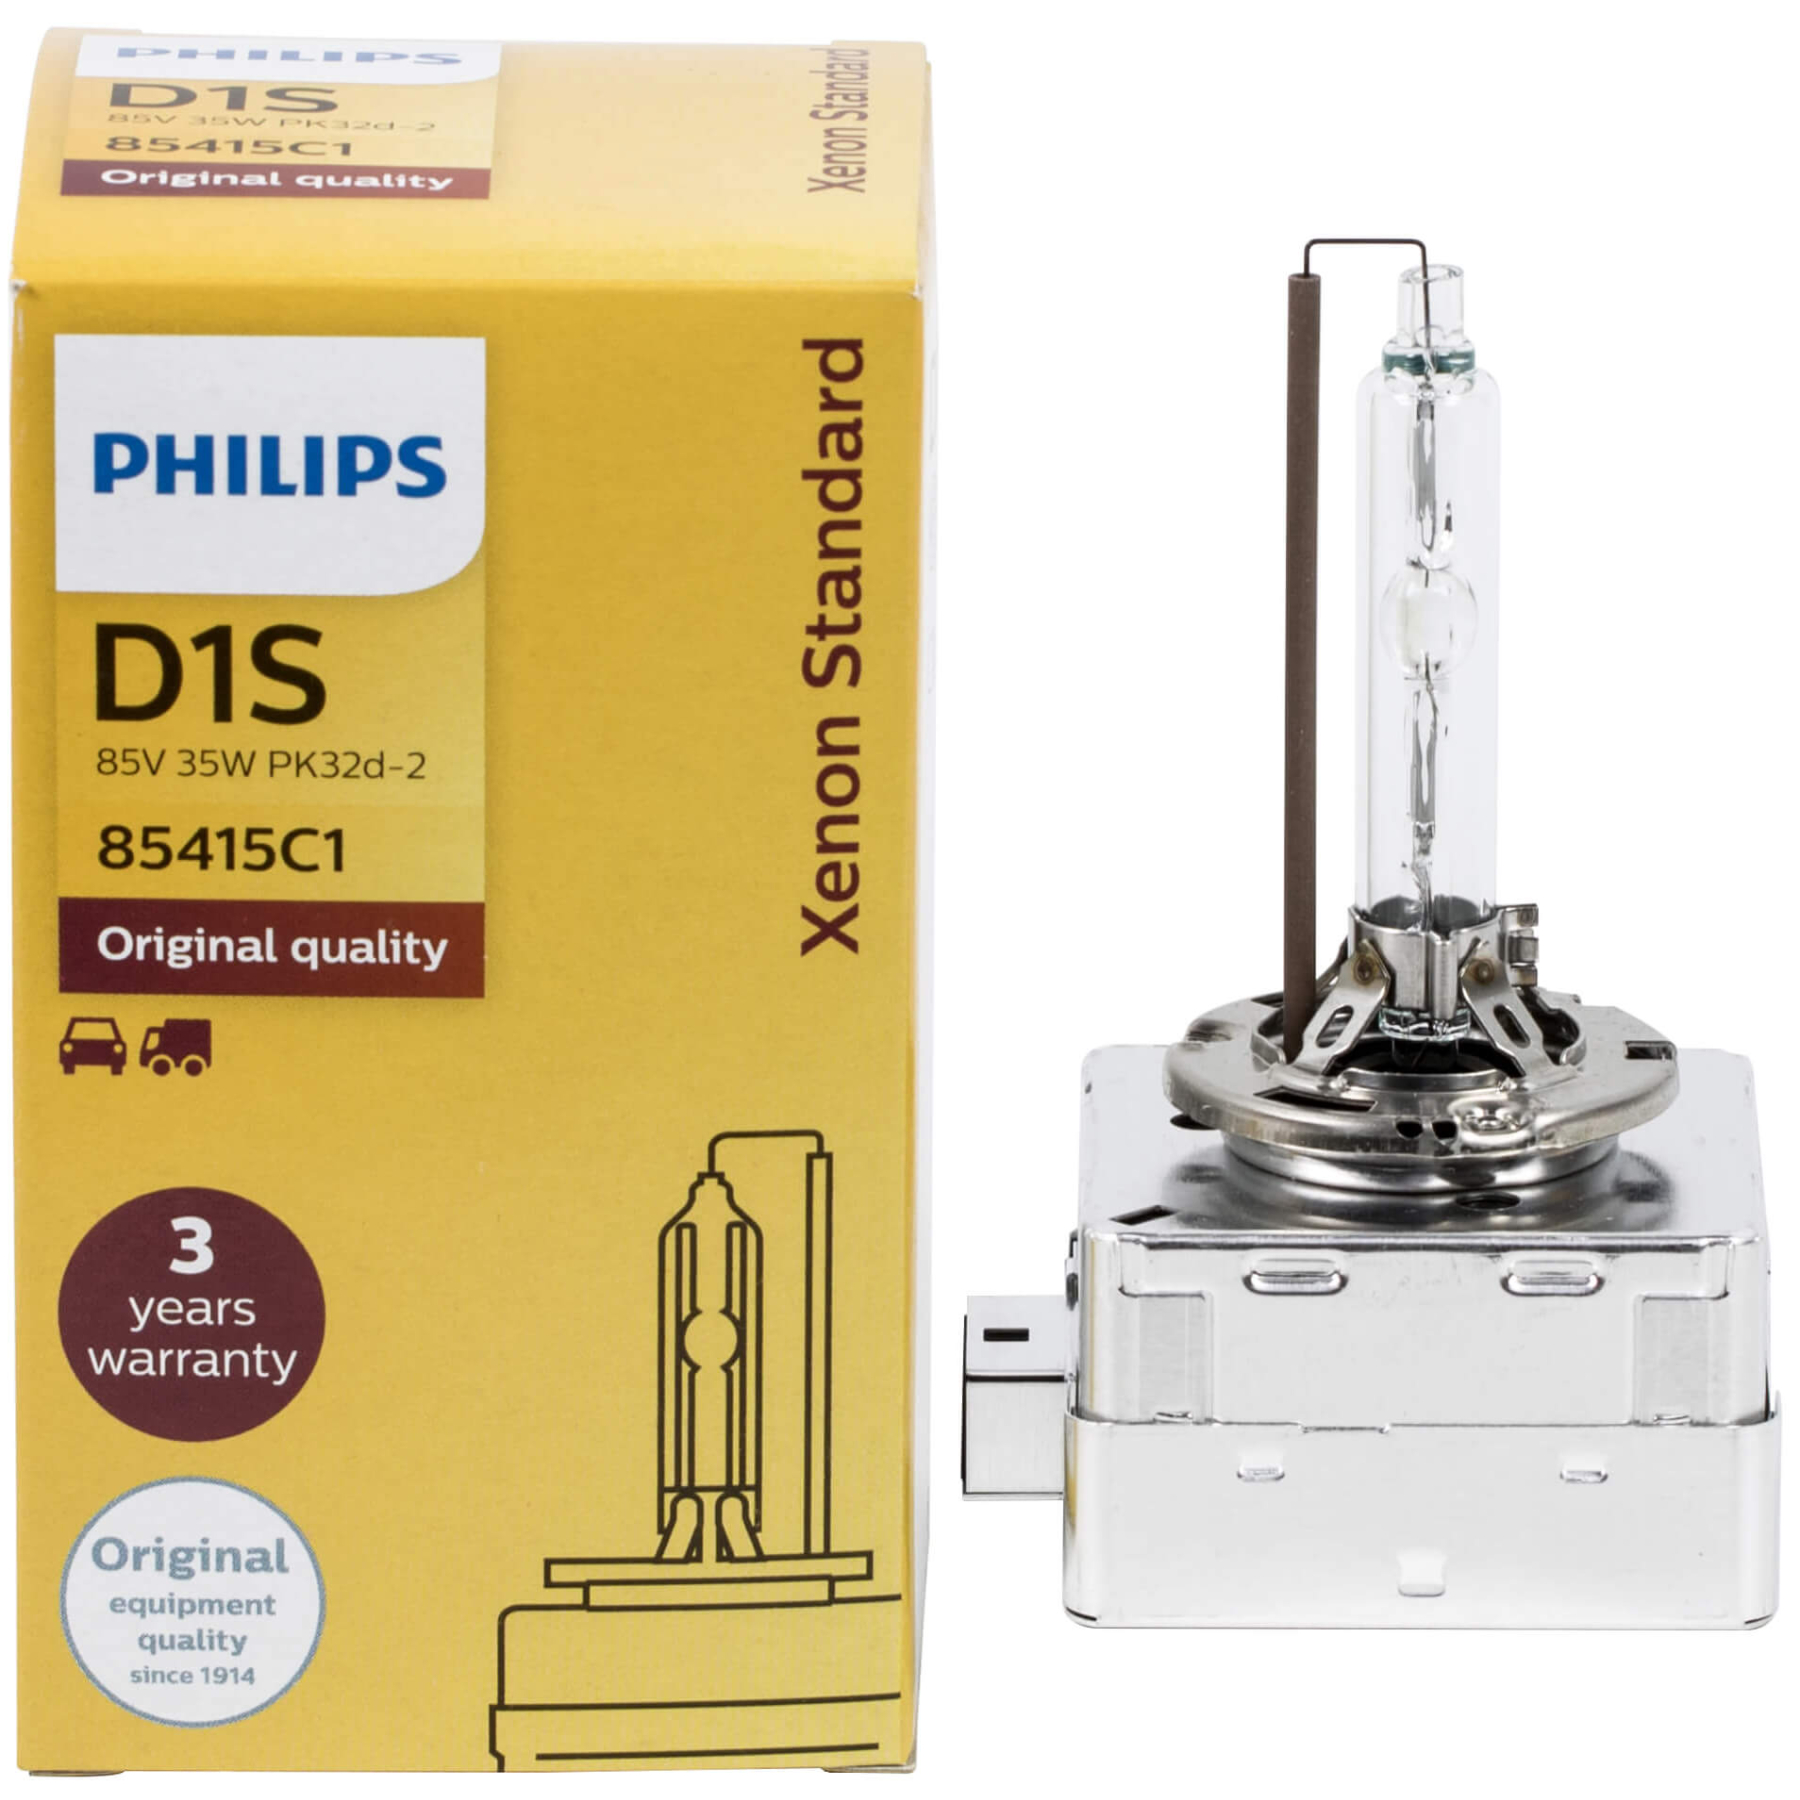 D1S XenStart from Philips headlight lamps, 79,00 €